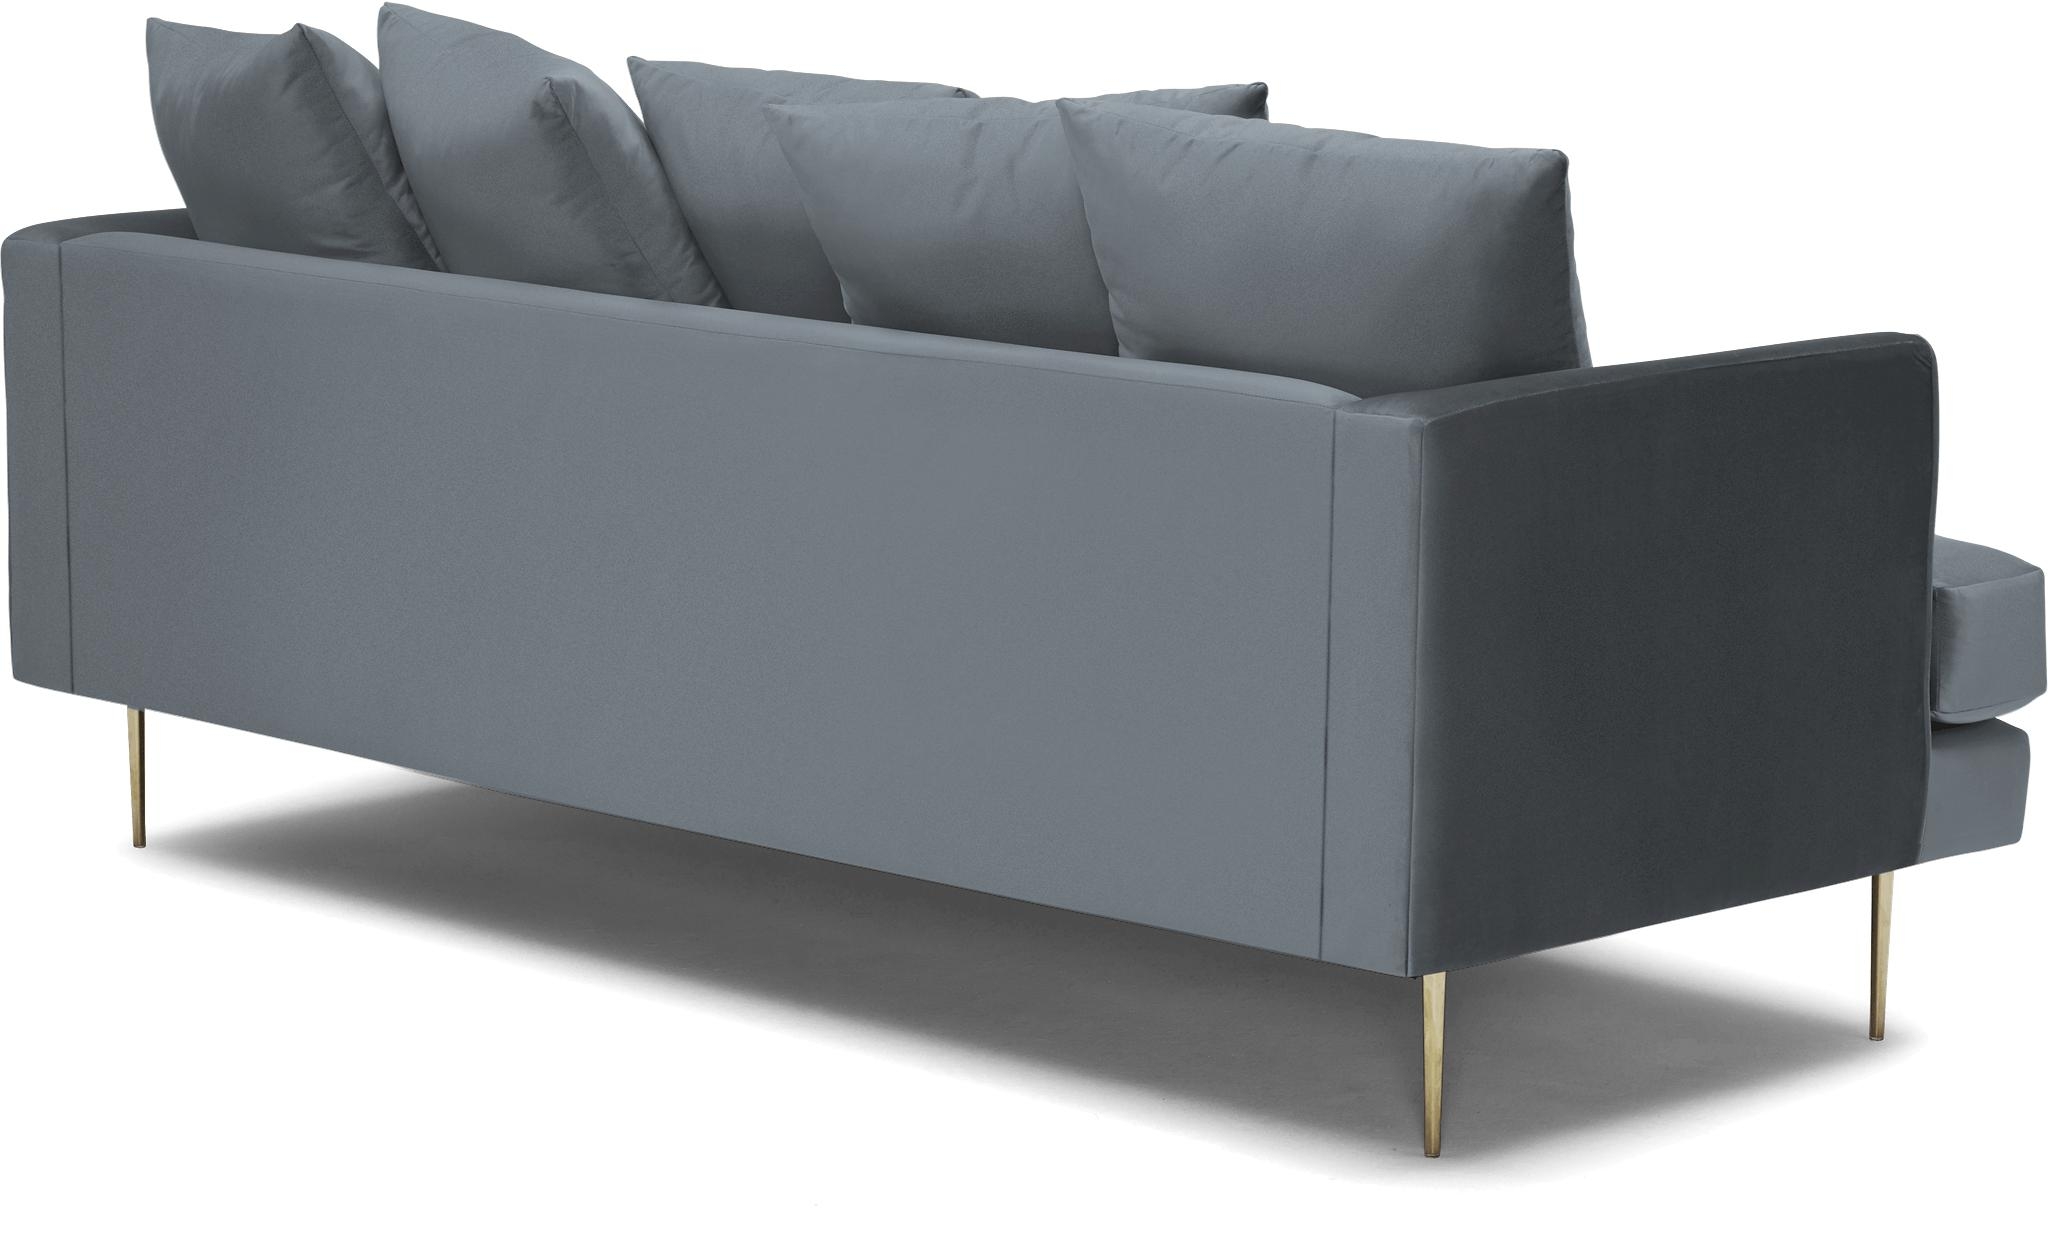 Gray Aime Mid Century Modern Sofa - Synergy Pewter - Image 3